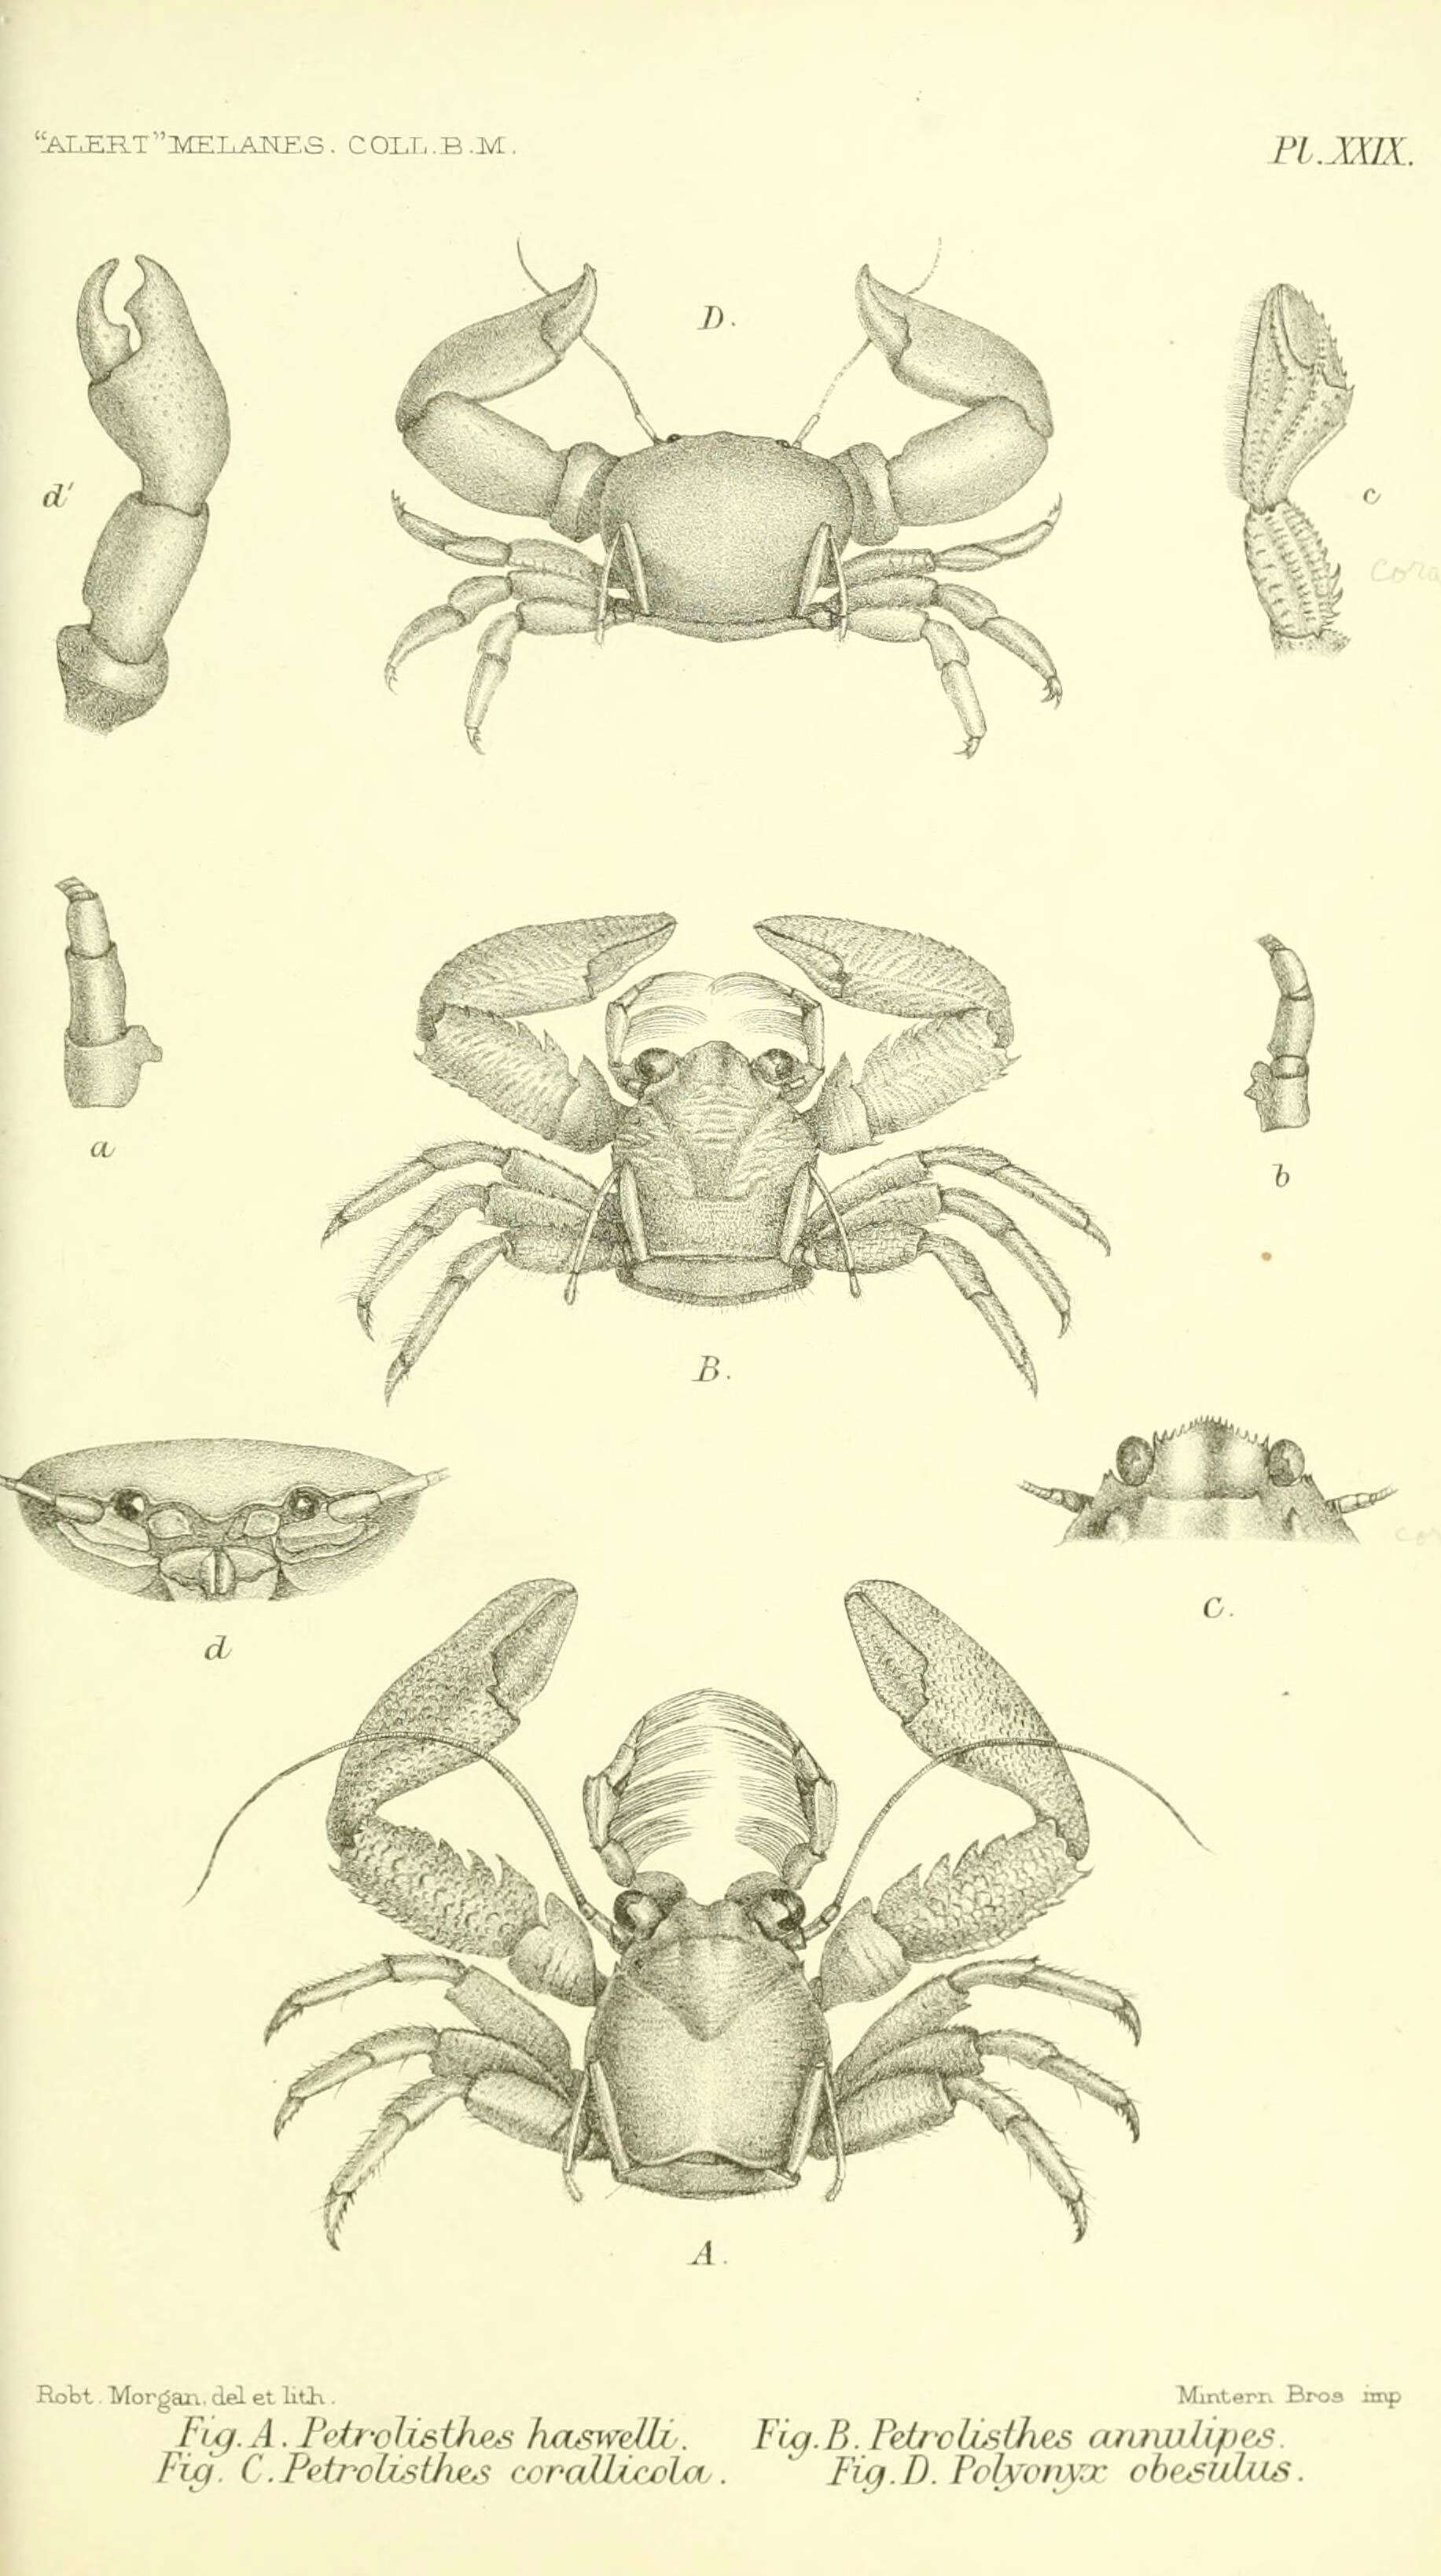 Image of Crevice-dwelling porcelain crab